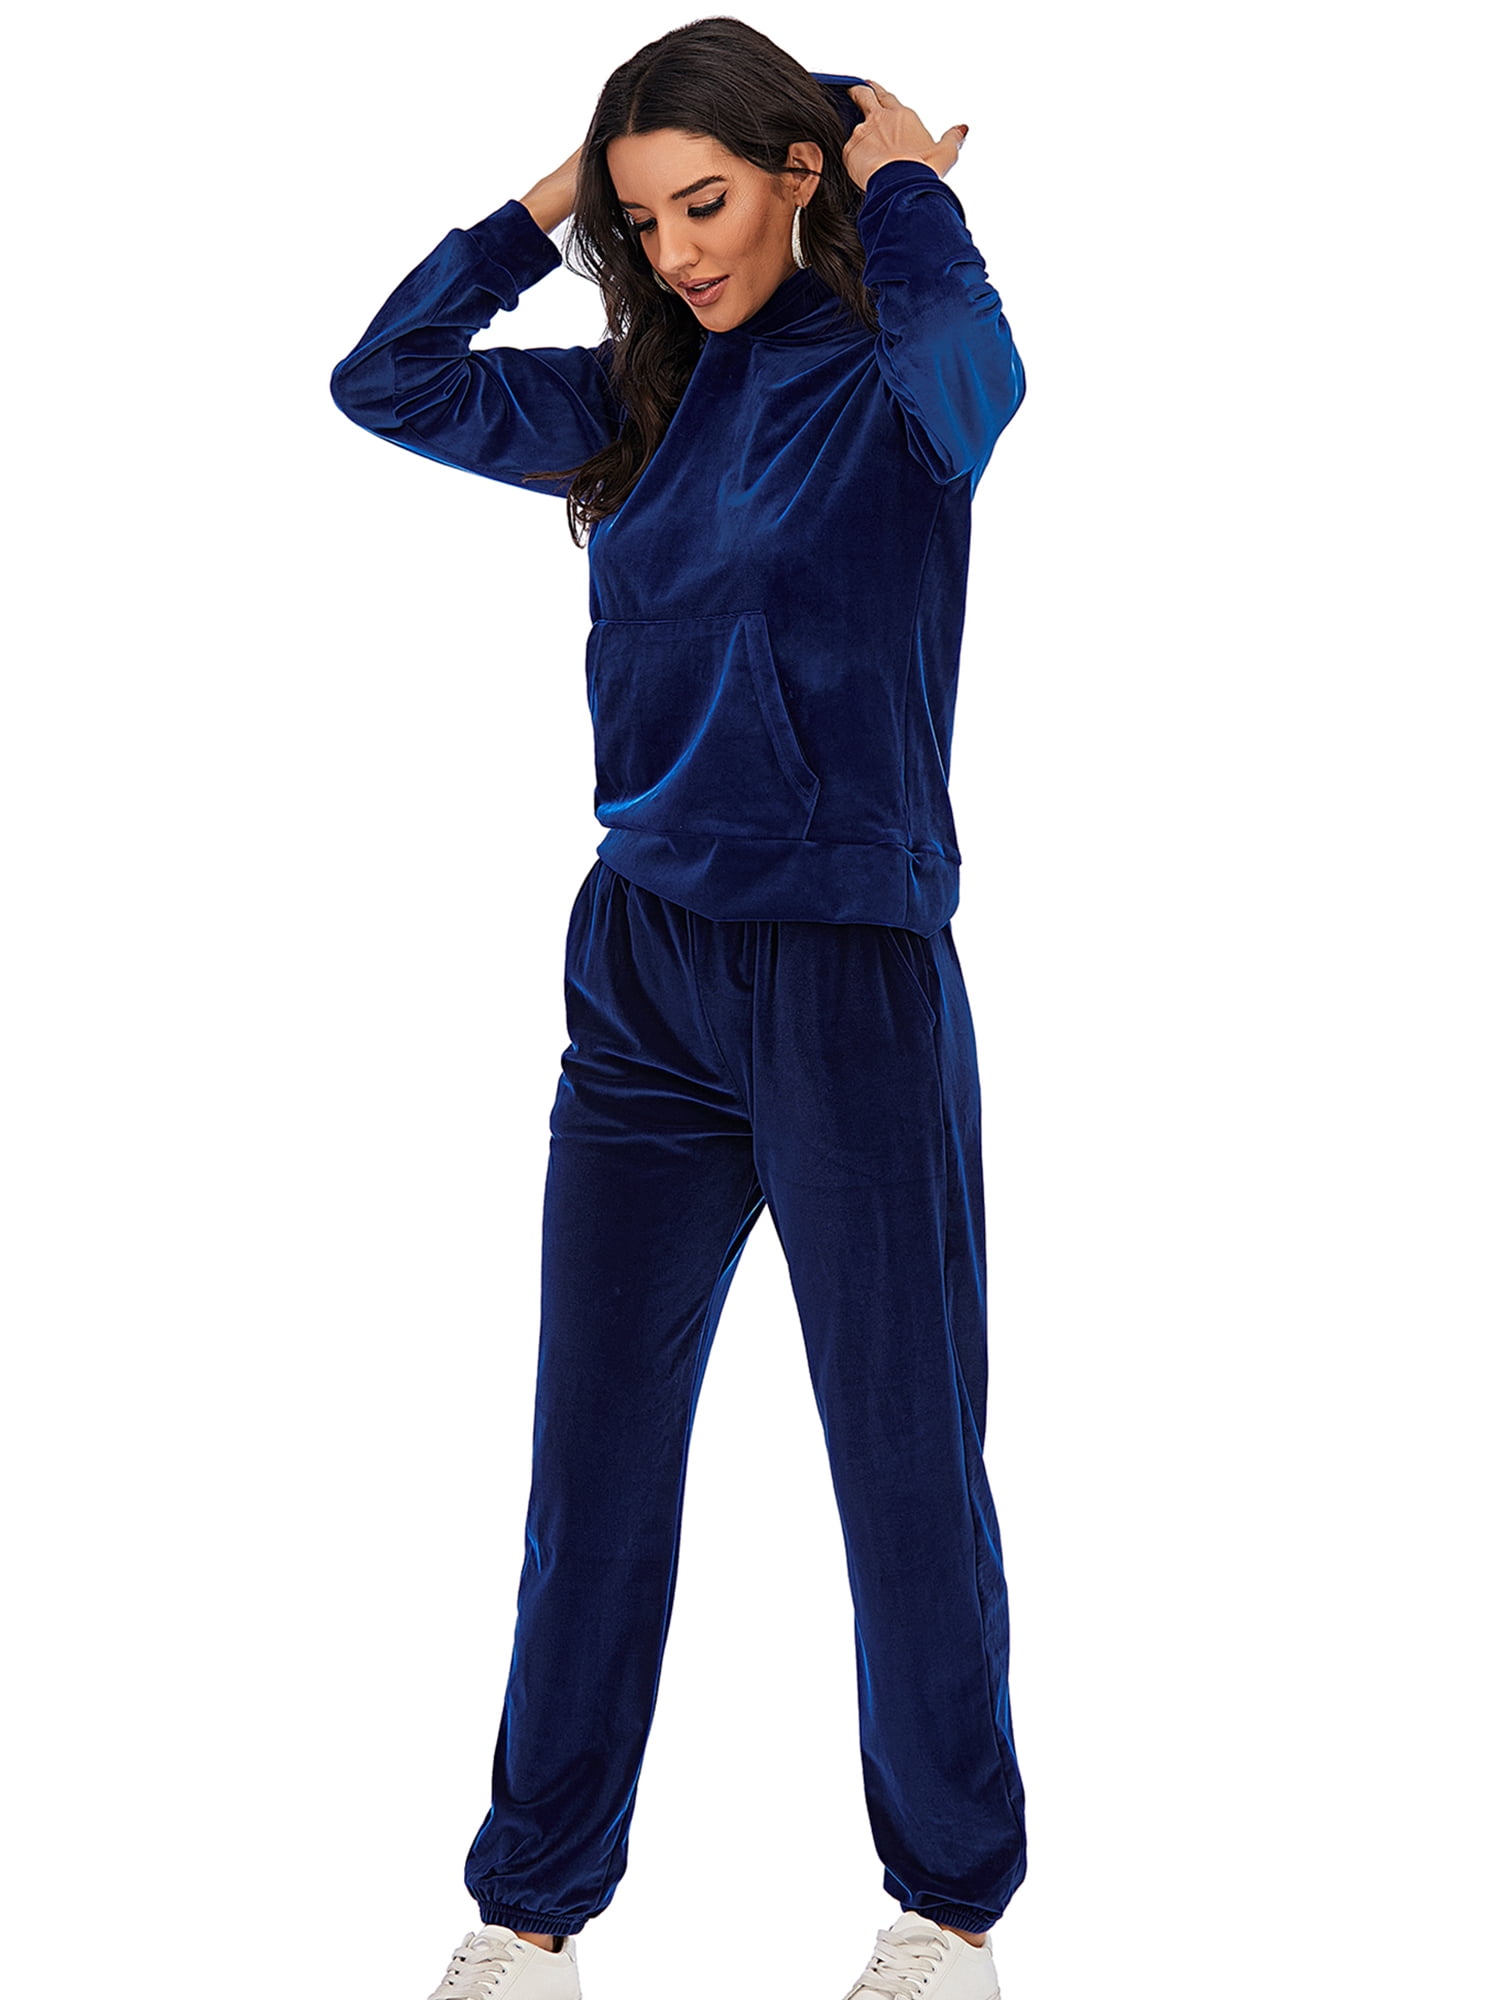 FUTATA Womens Velour Sweatsuit Sets Workout Tracksuit 2 Piece Outfits ...